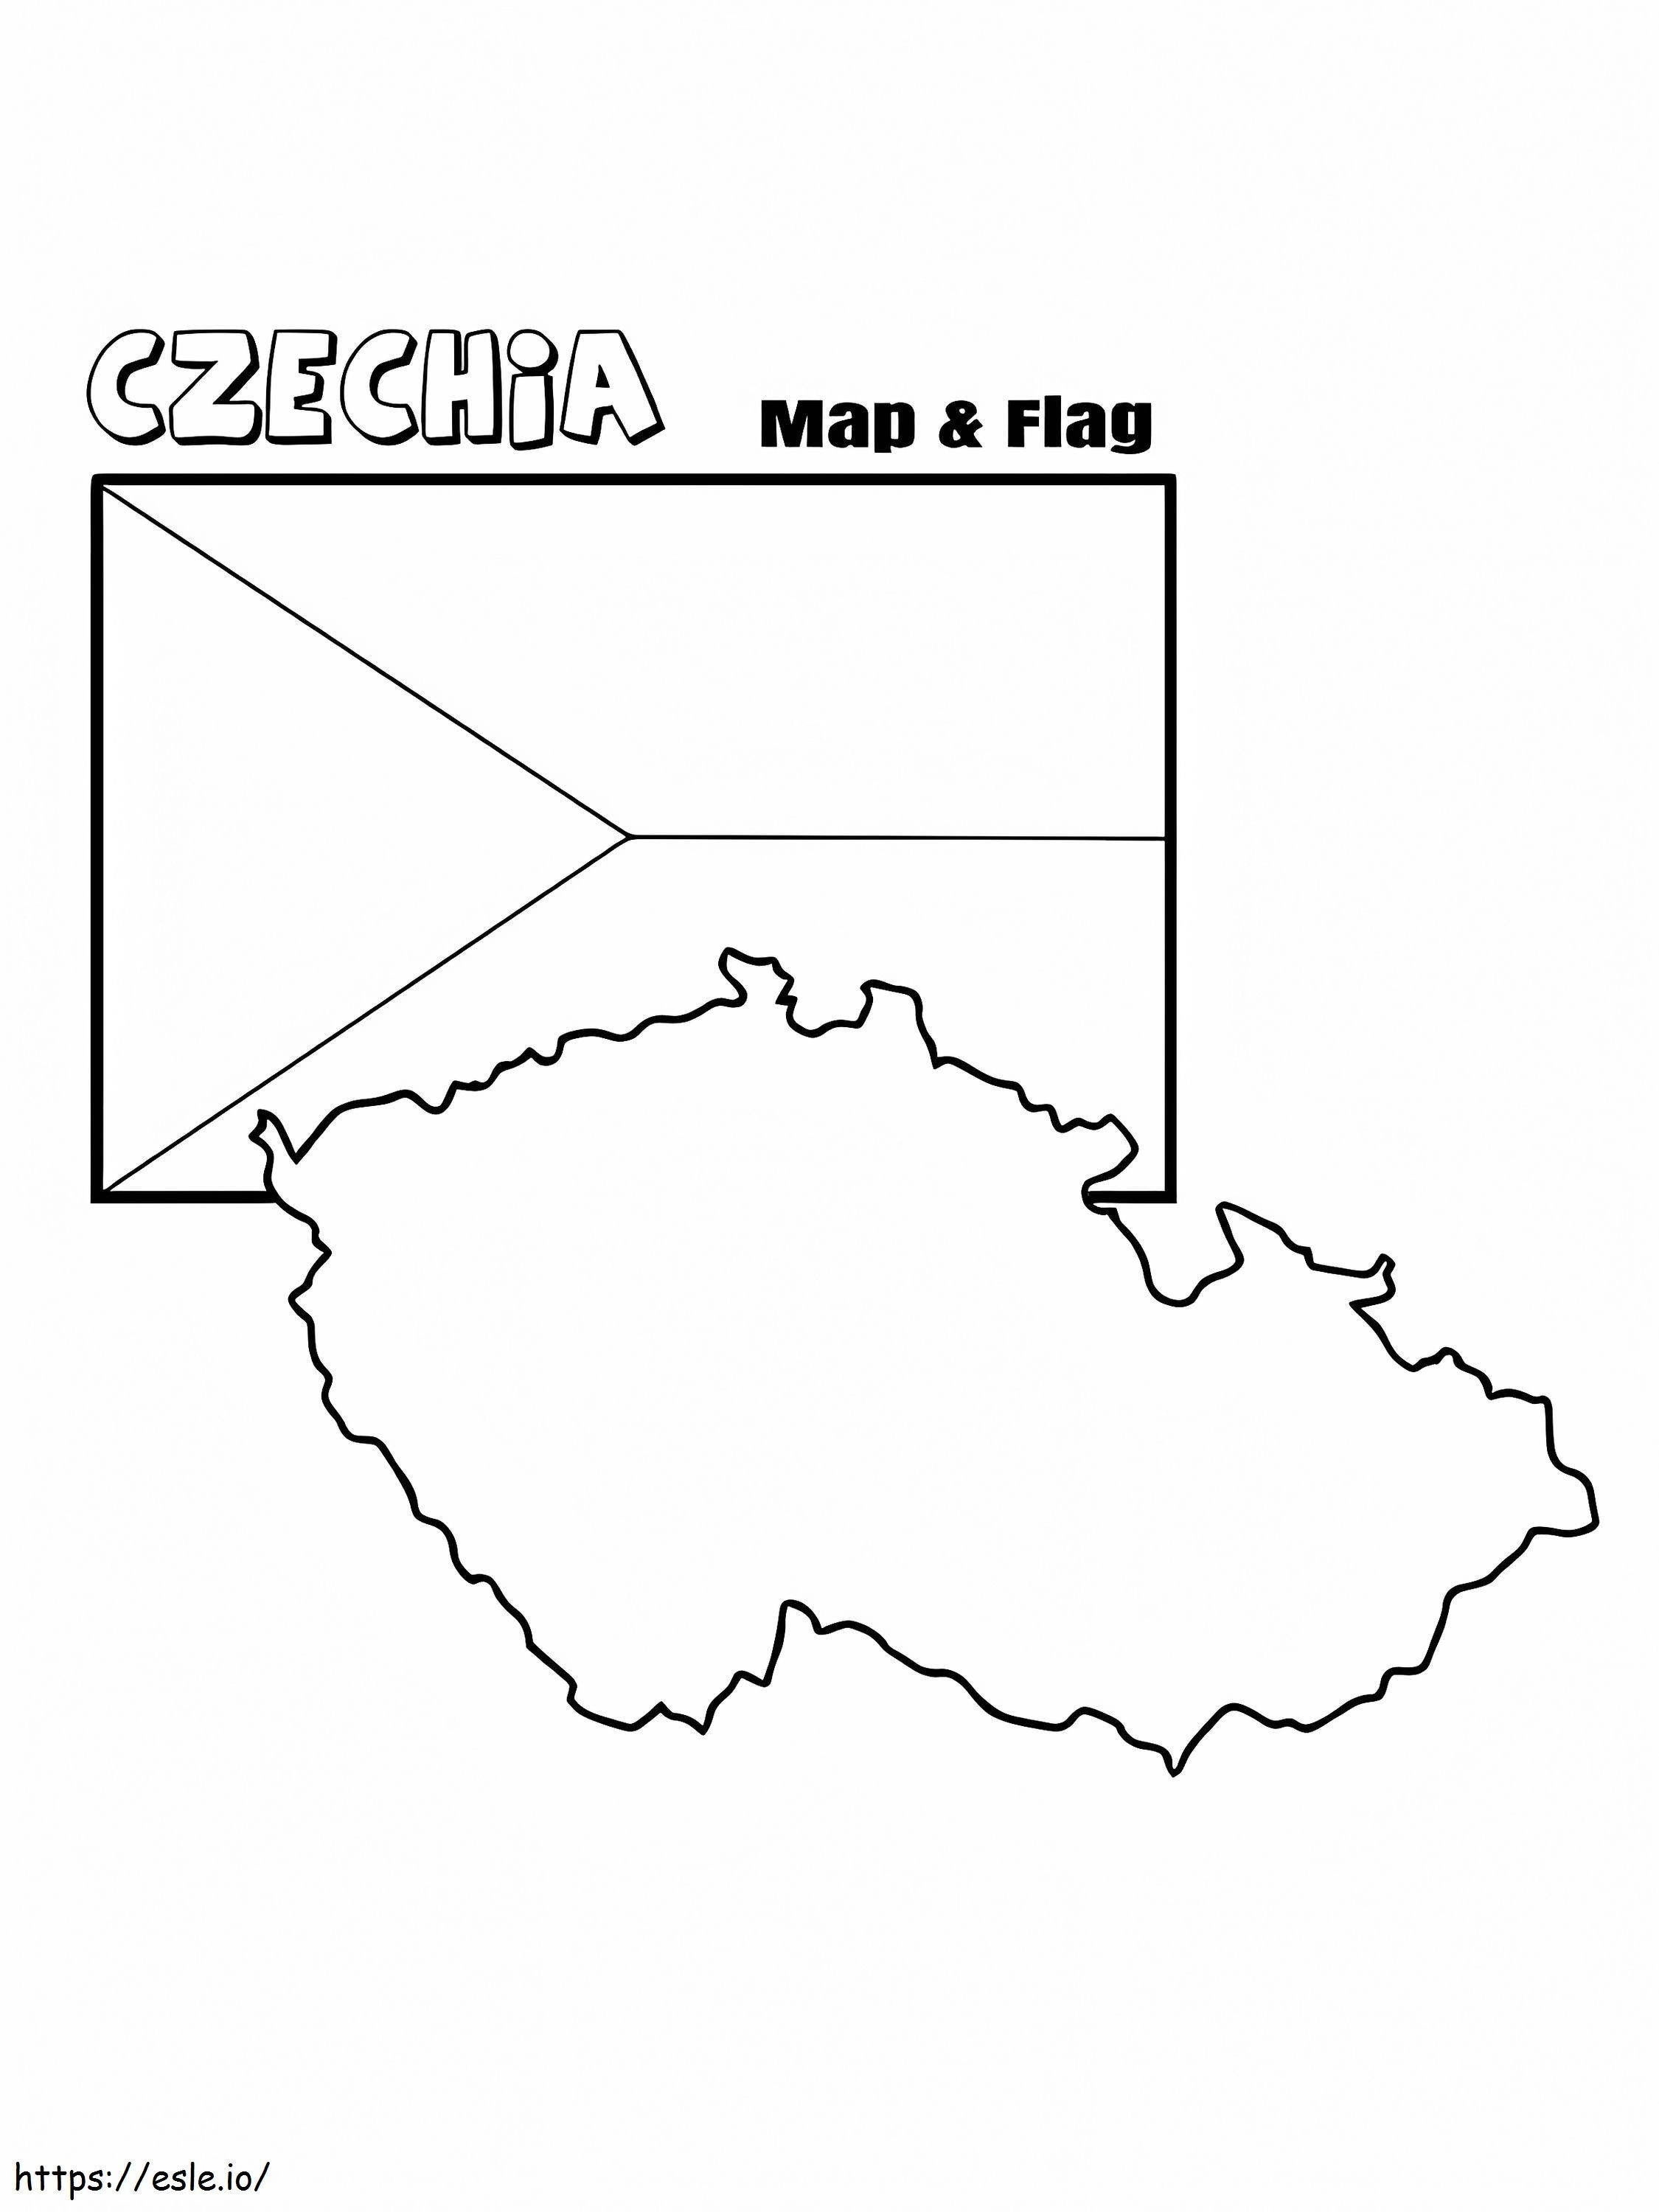 Bandeira e mapa da República Tcheca para colorir